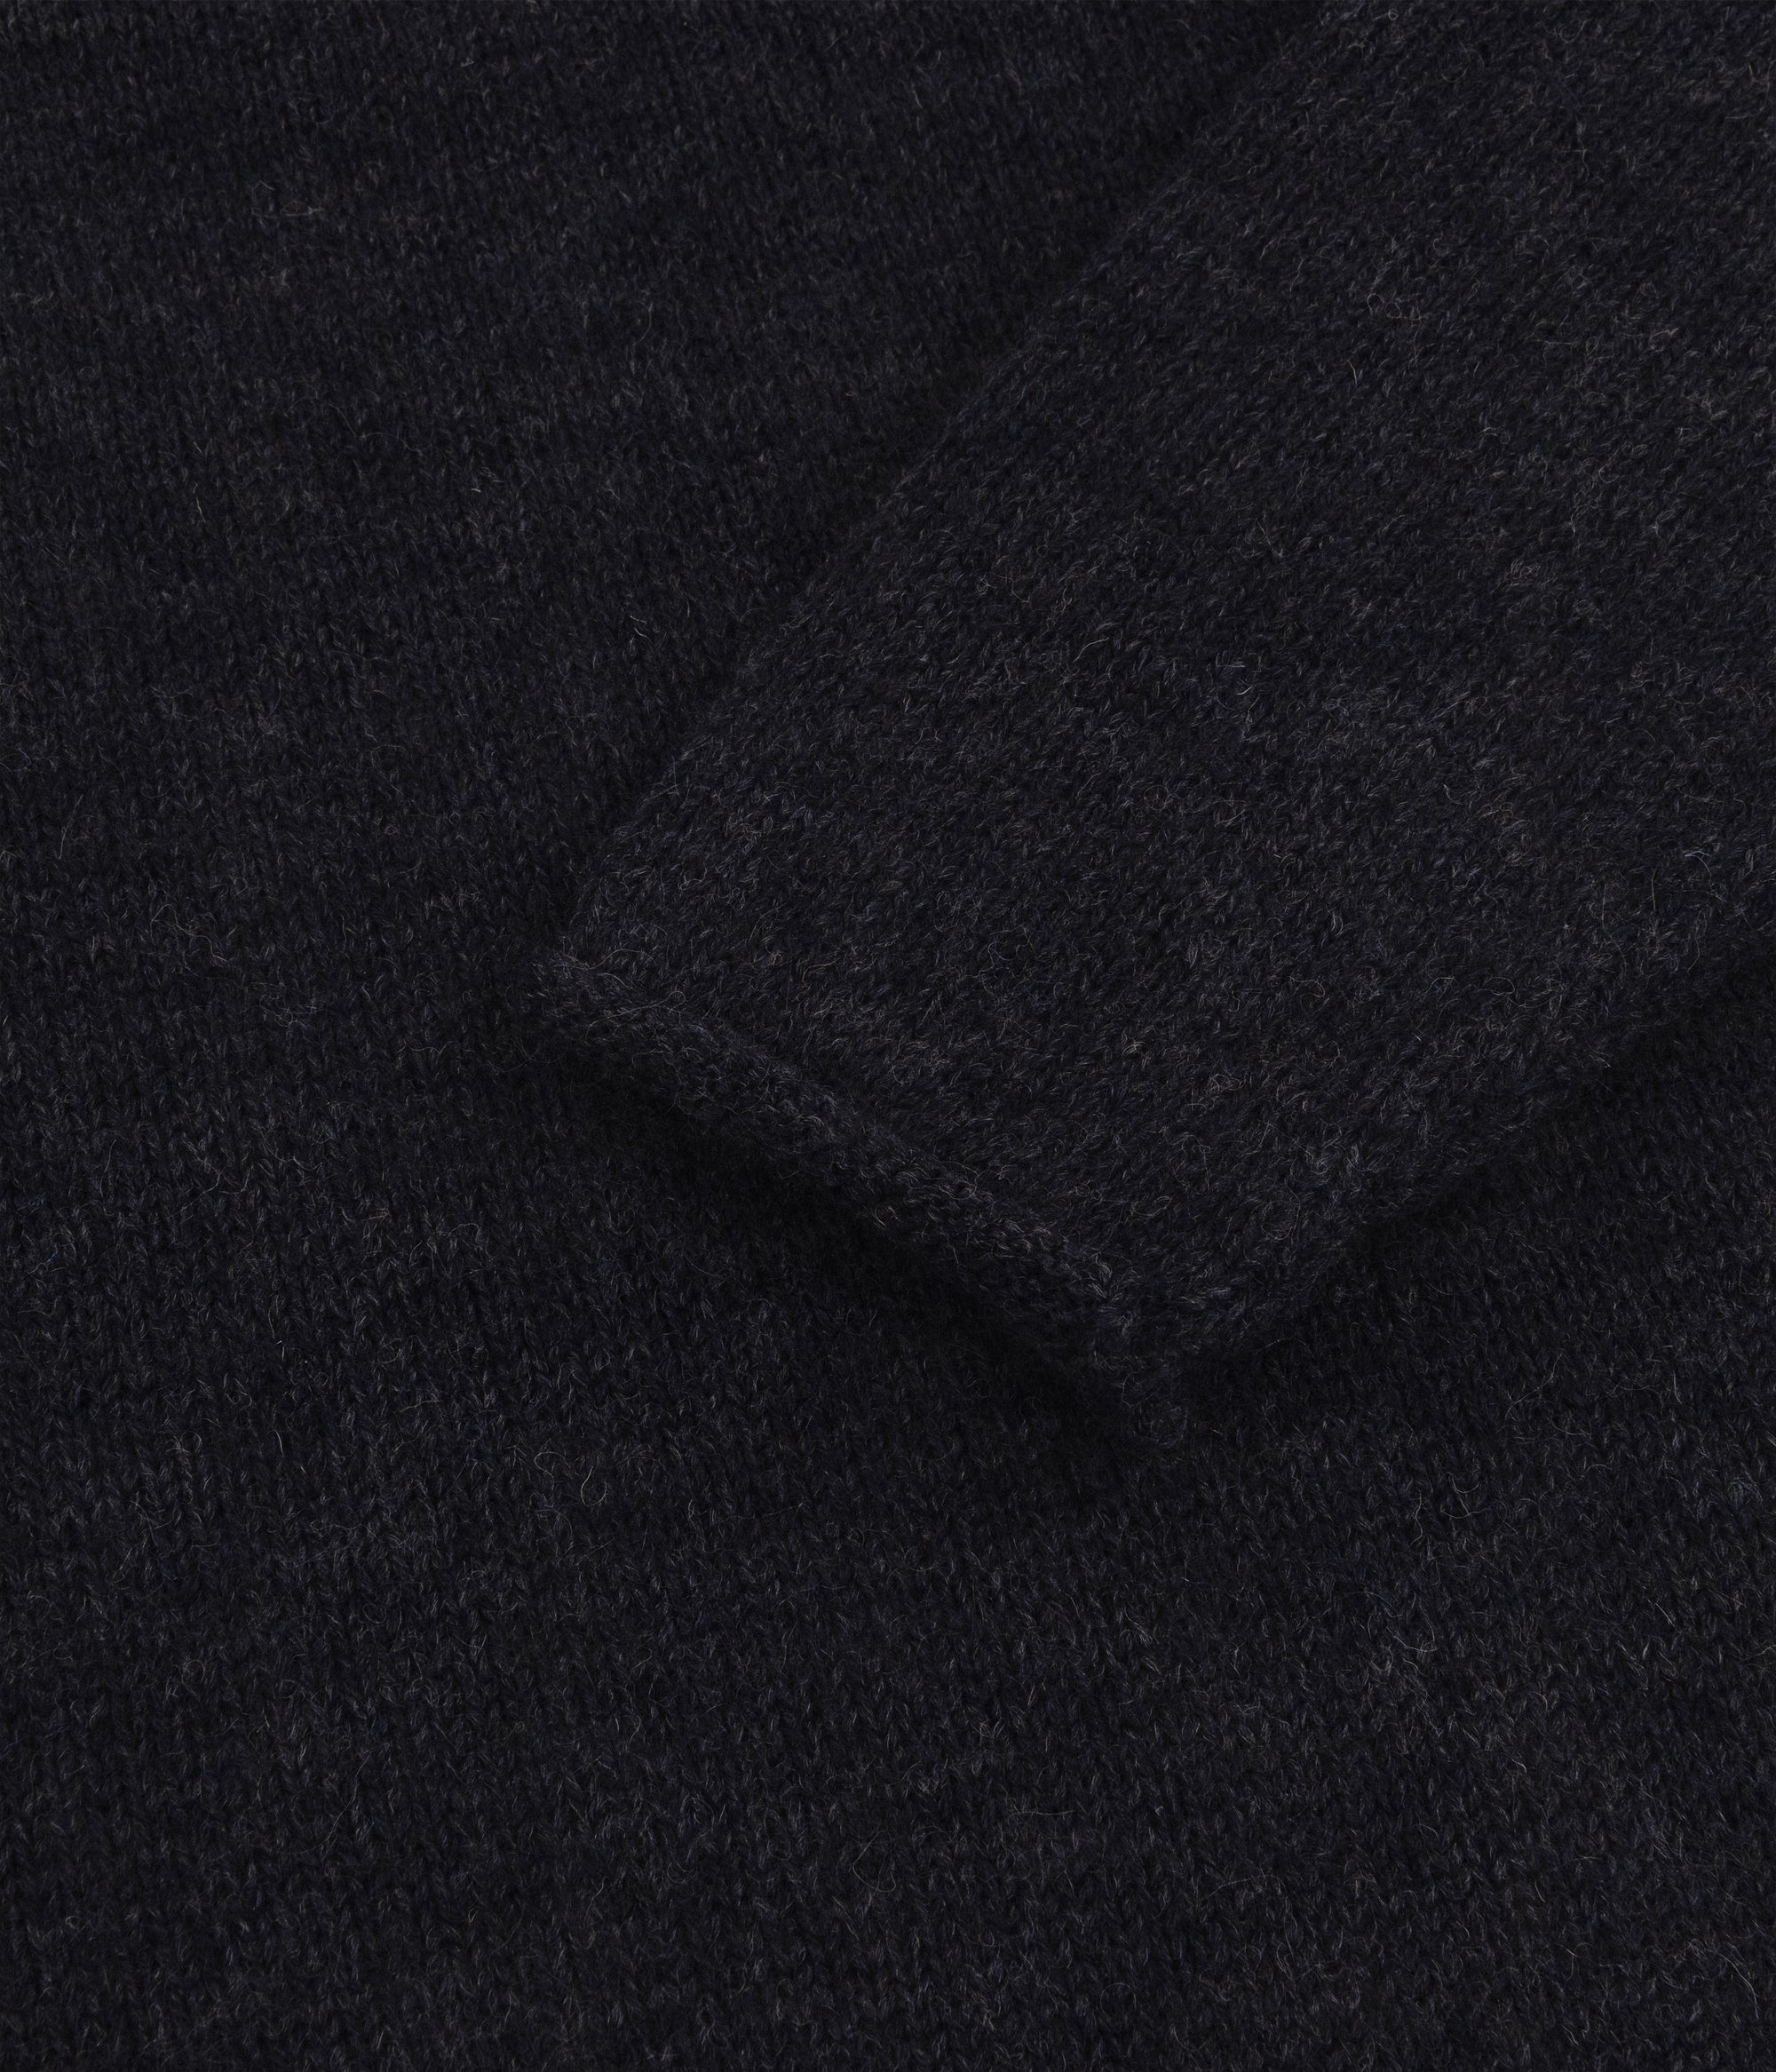 Quarter Zip Sweater, Charcoal